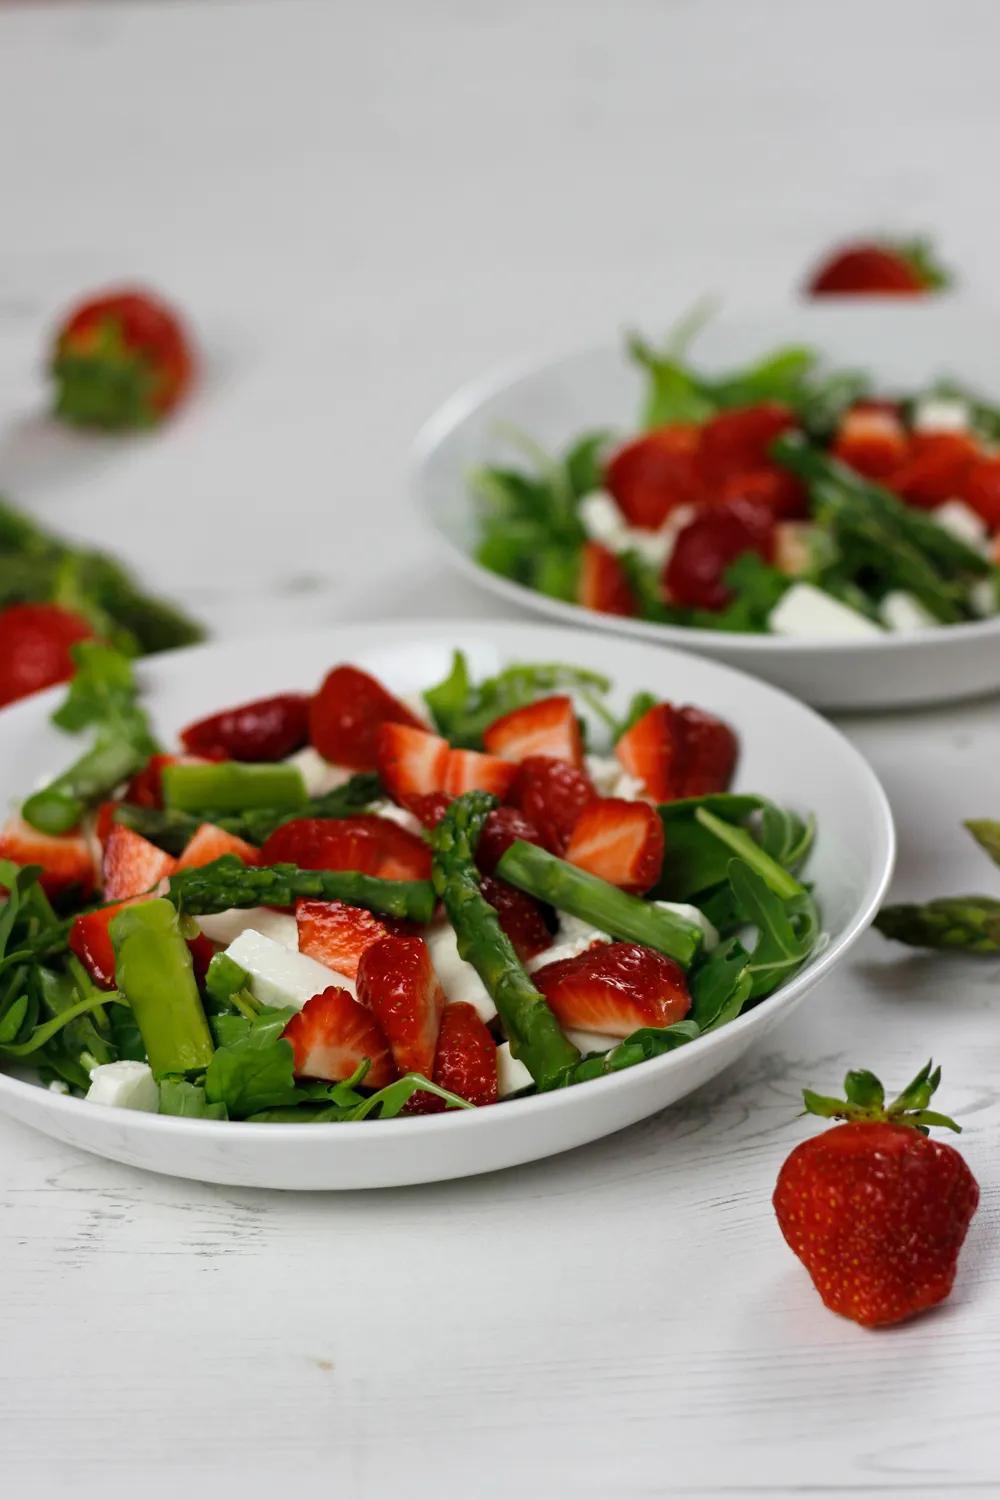 Spargel-Erdbeer-Feta-Salat mit Zitronendressing 02 - suechtignach.at